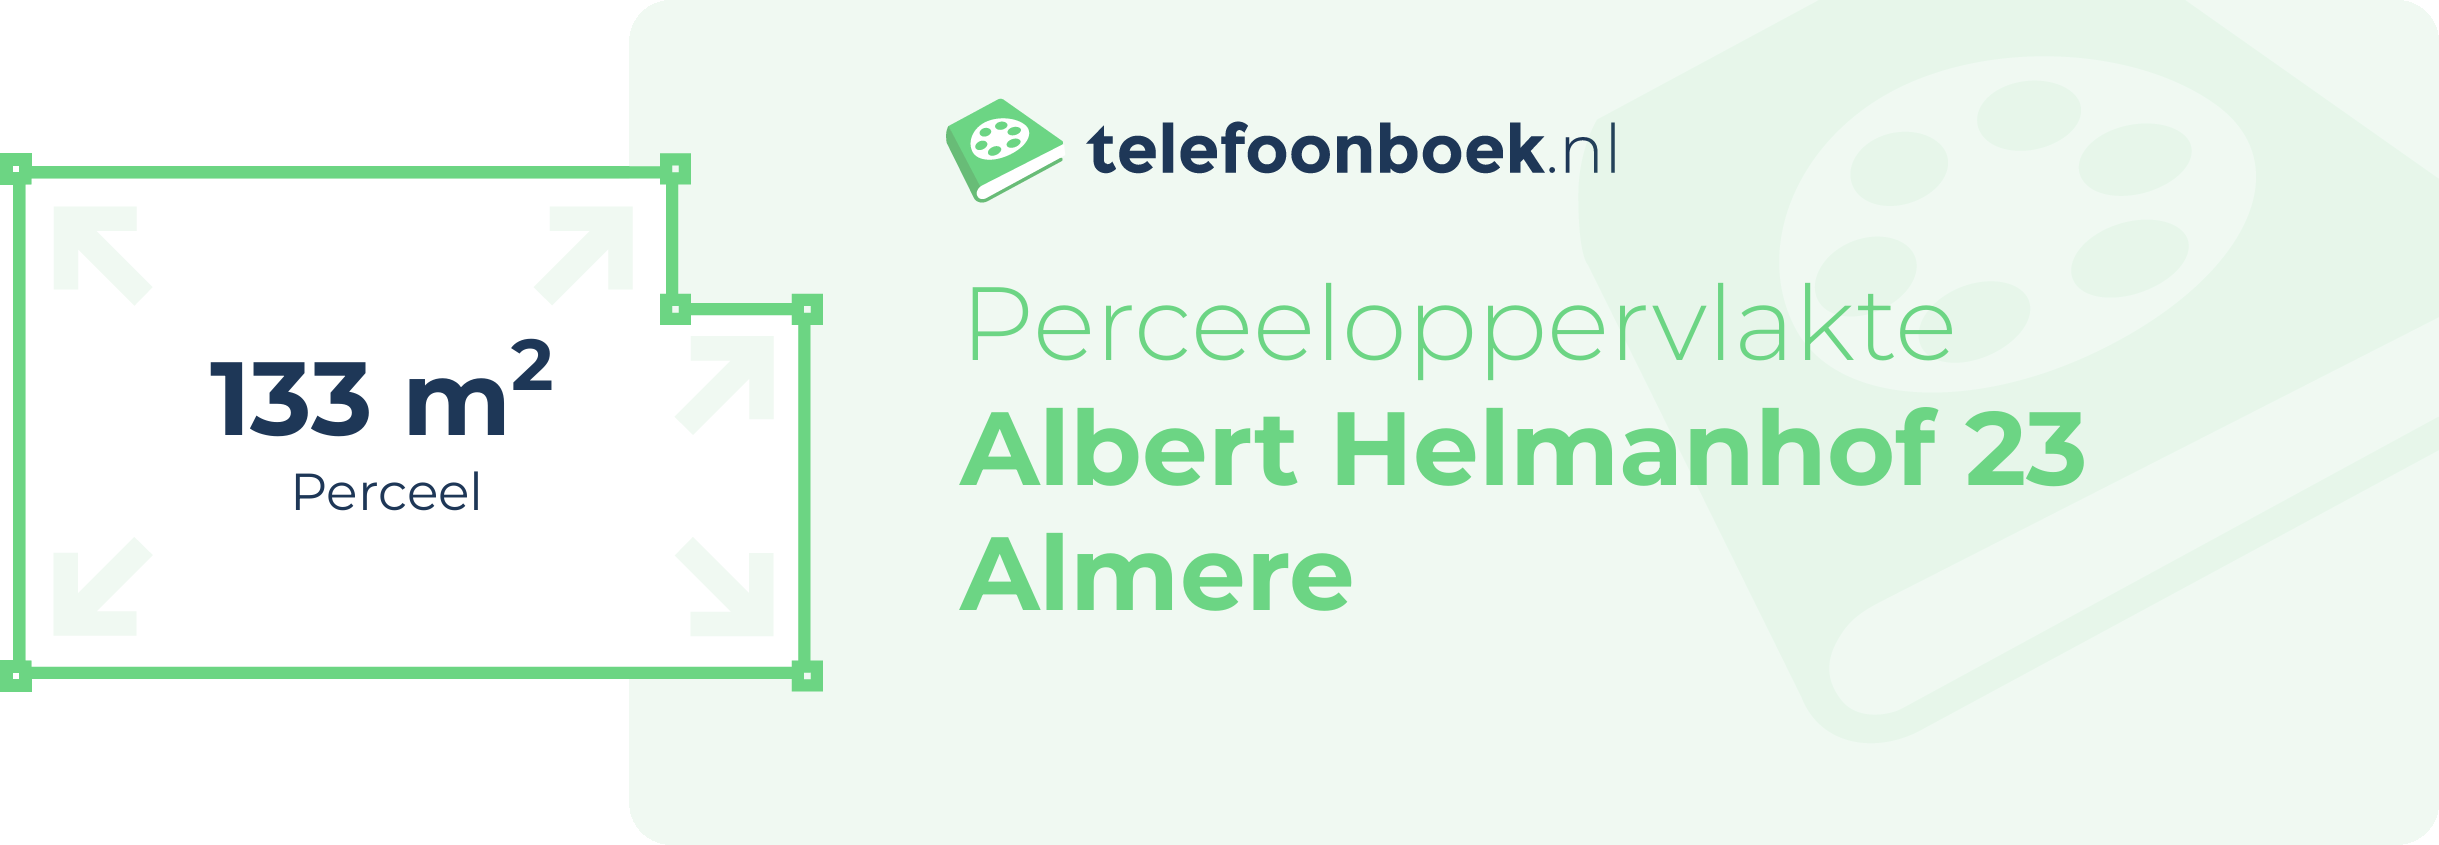 Perceeloppervlakte Albert Helmanhof 23 Almere